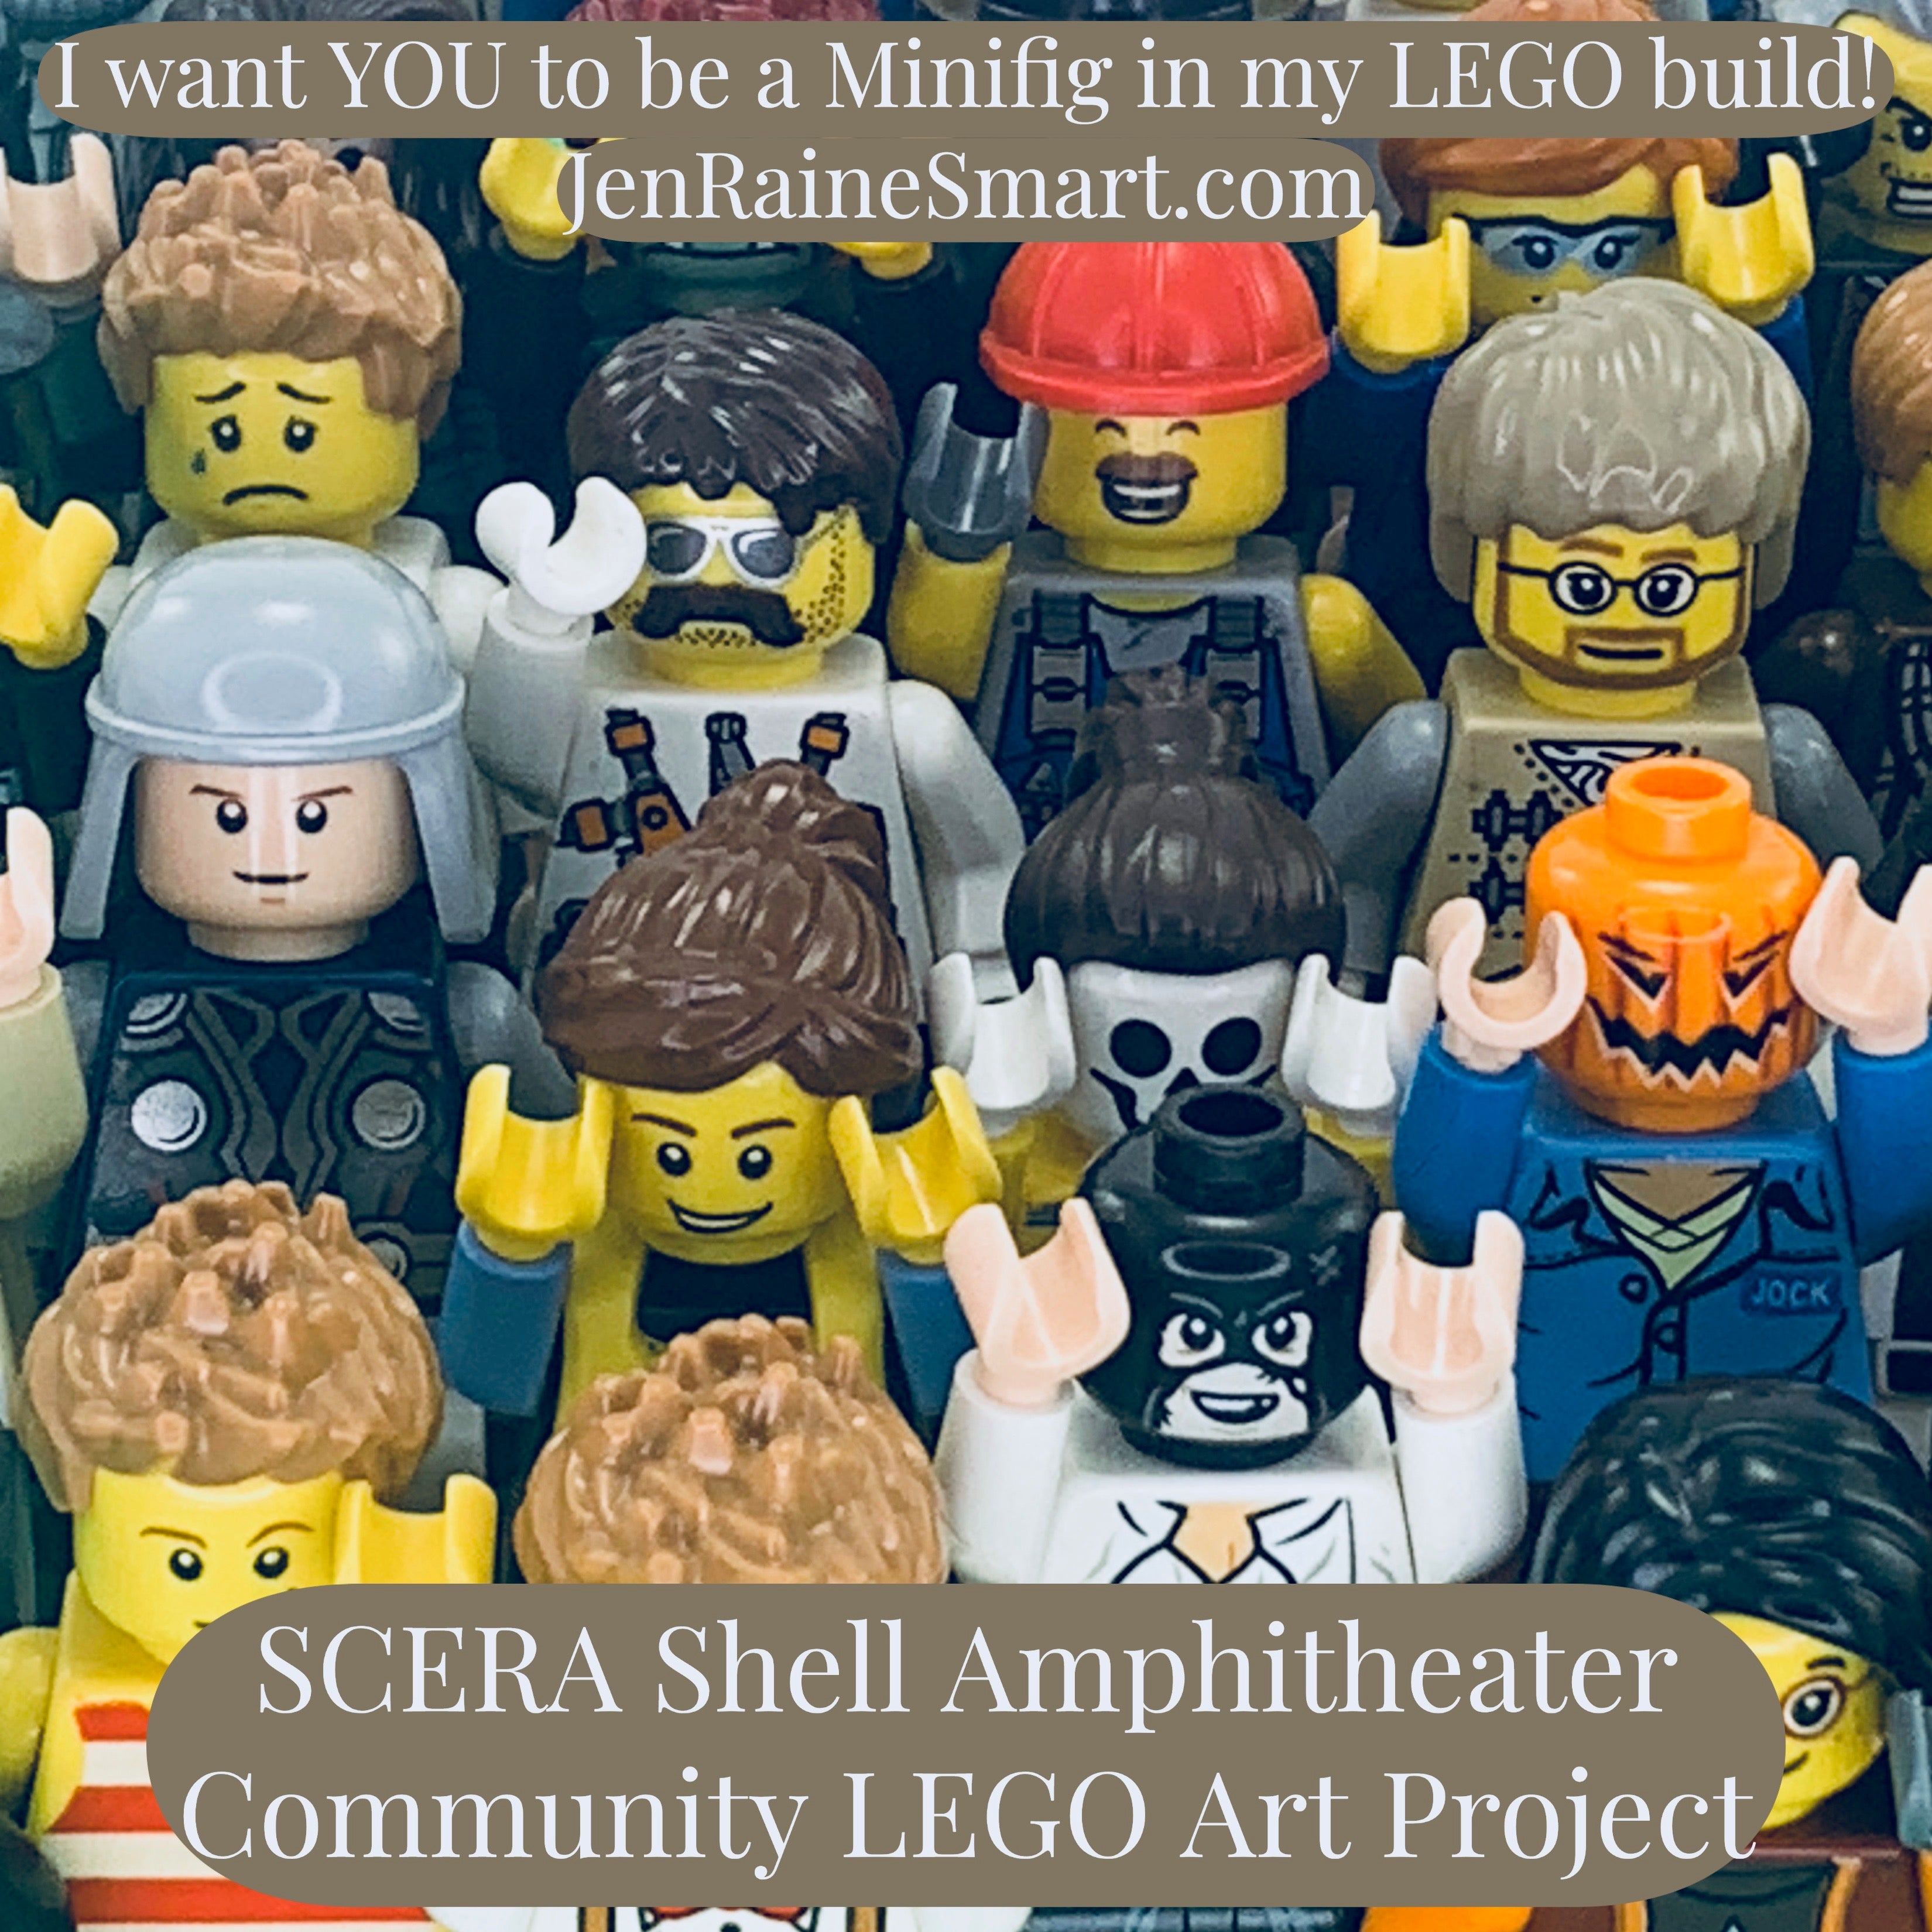 Community LEGO Art Project Minifig